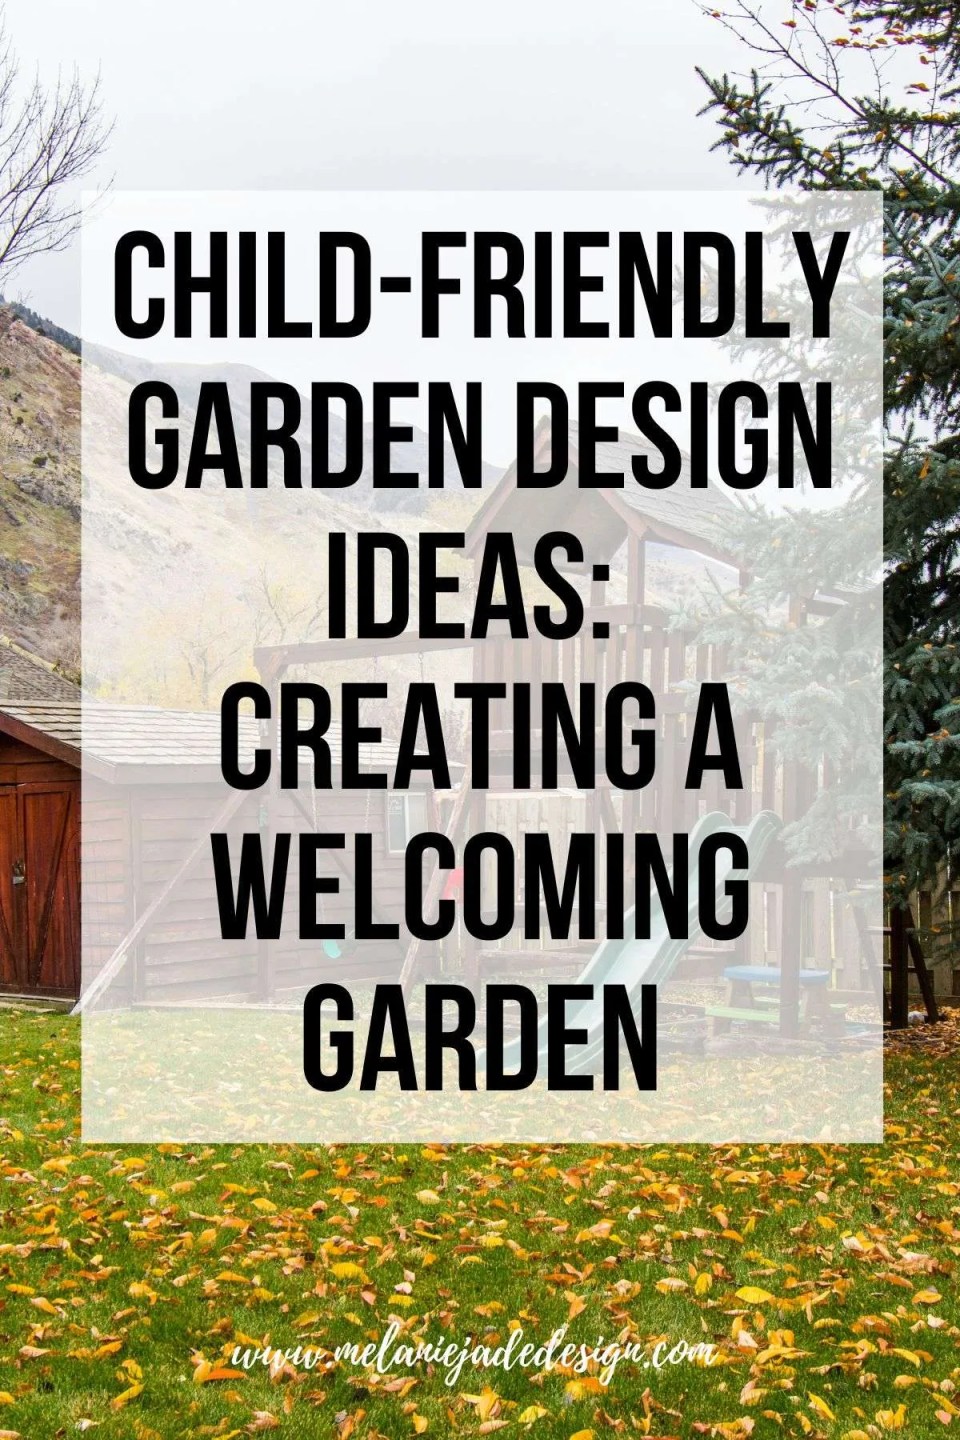 Child-Friendly Garden Design Ideas - Creating a Welcoming Garden pinterest pin